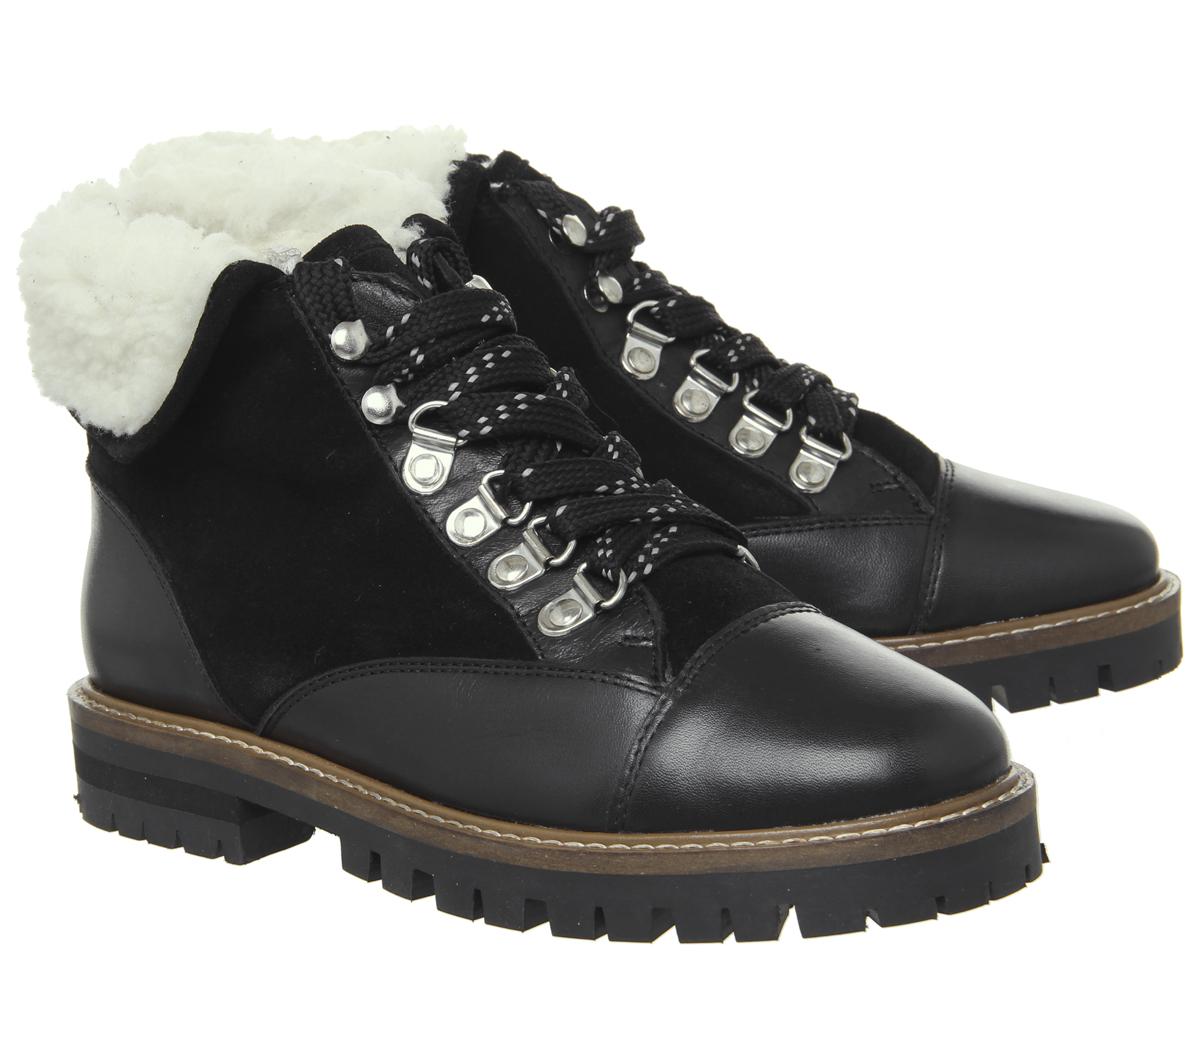 OFFICE Adams Furline Hiker Boots Black Suede Leather - Women's Boots